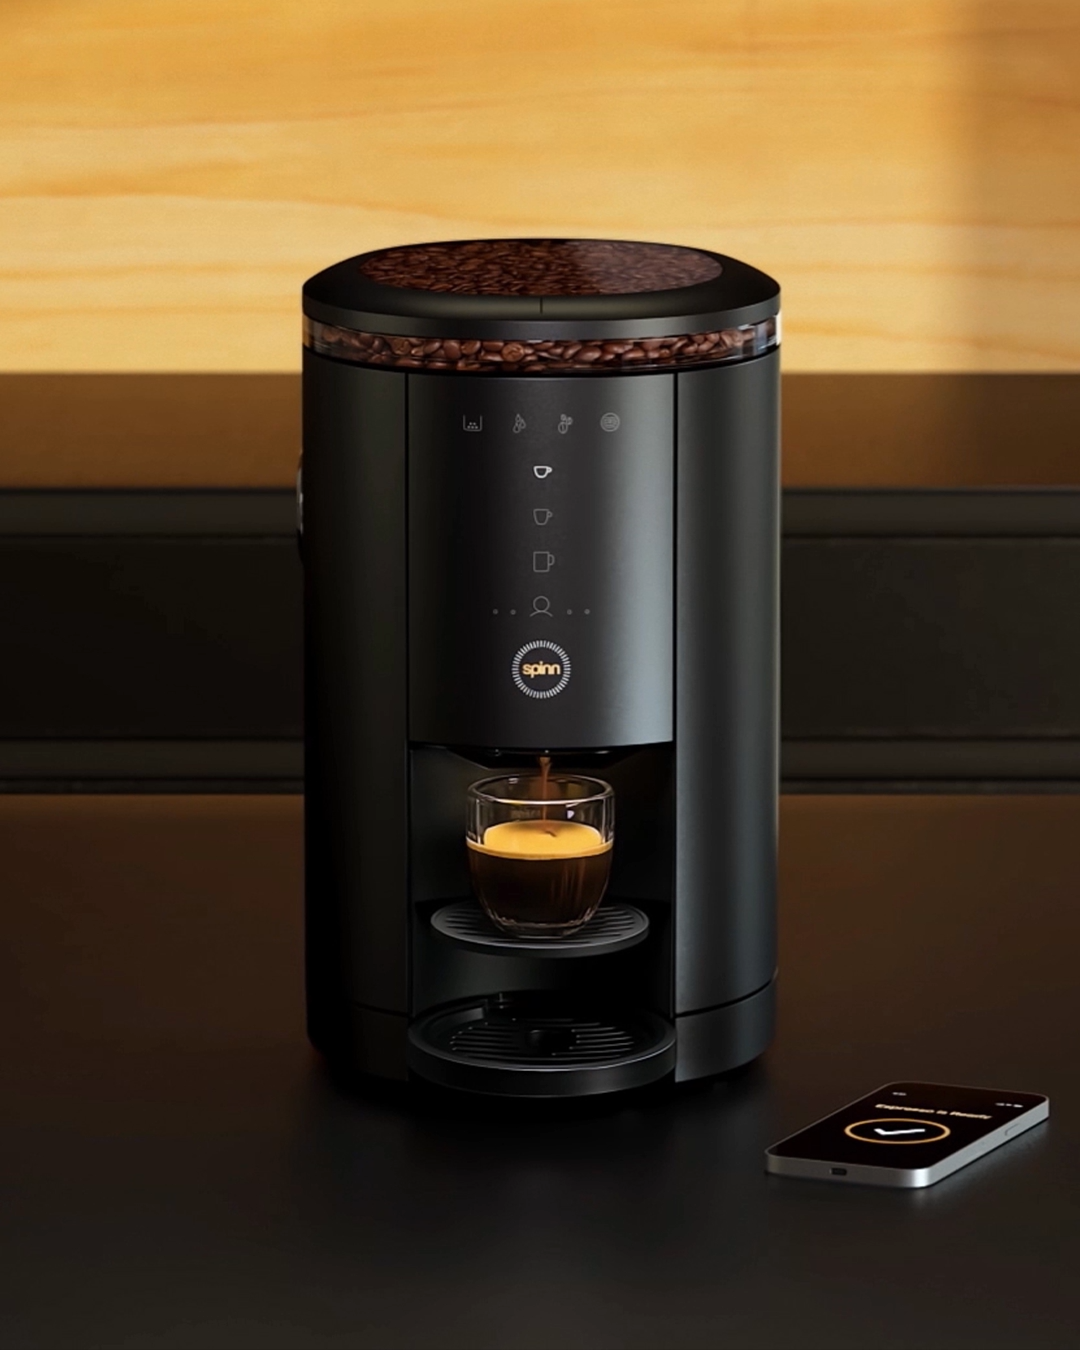 Spinn Coffee Maker Review